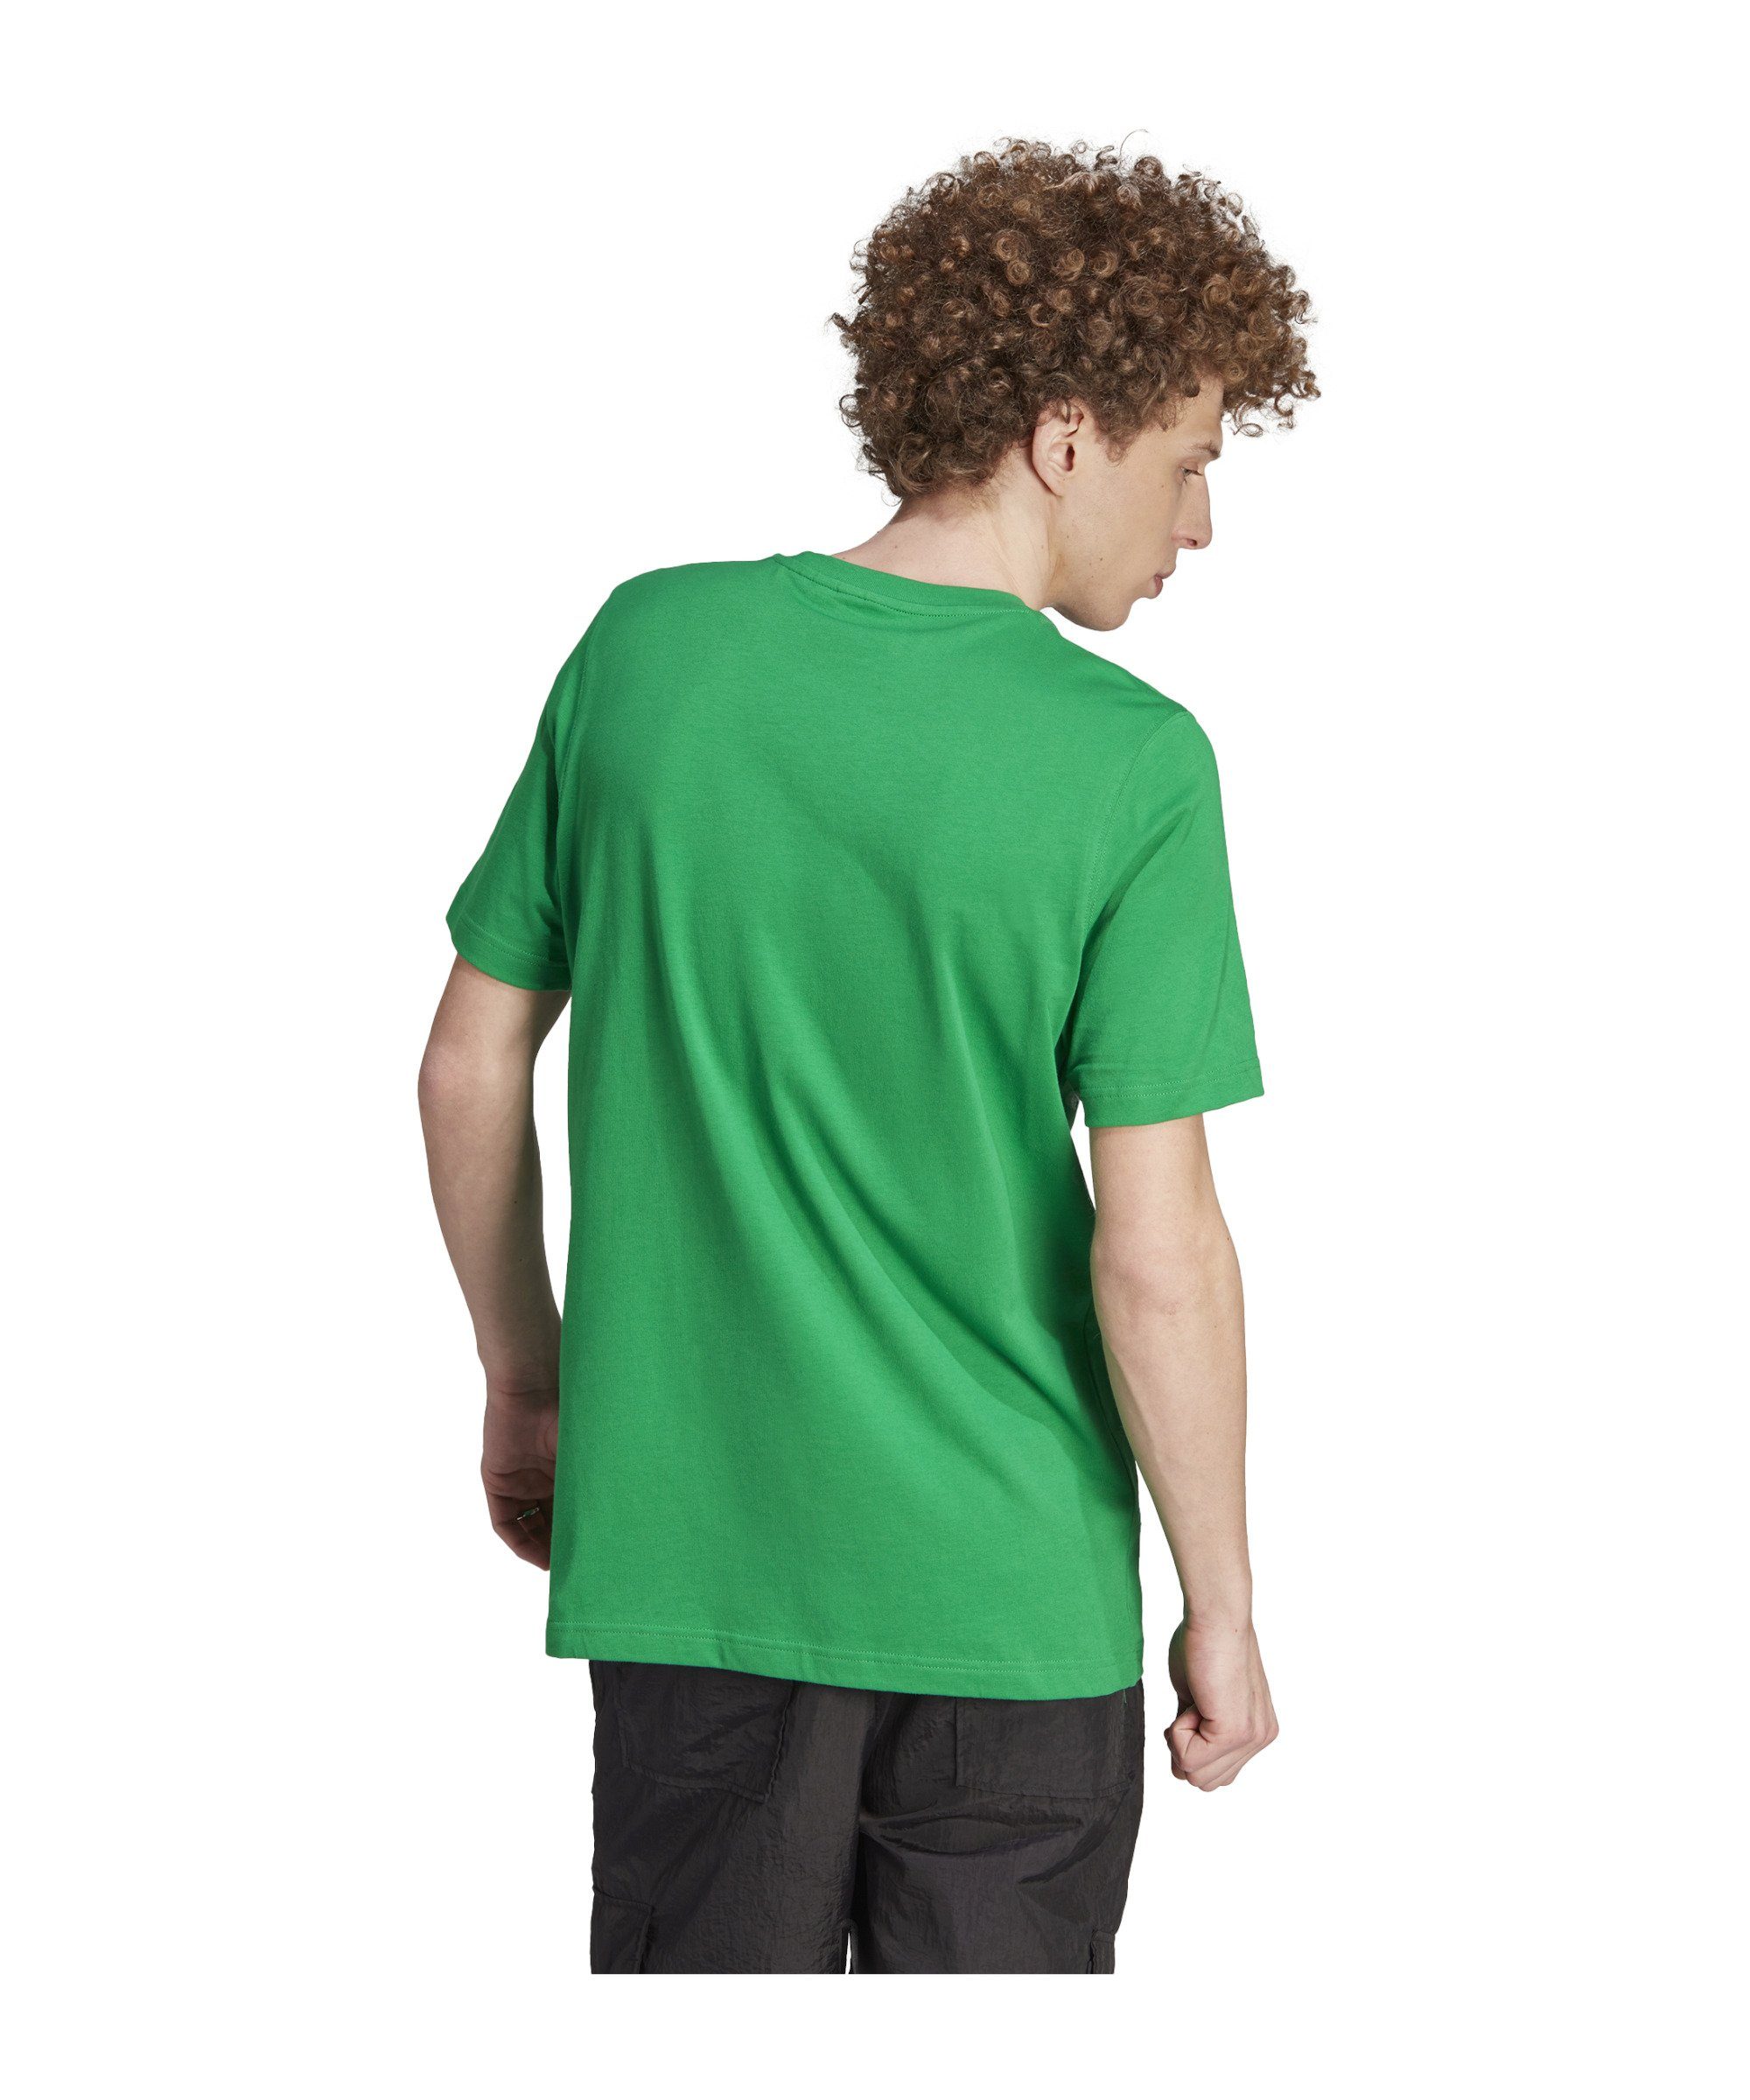 Trefoil T-Shirt default adidas Originals T-Shirt